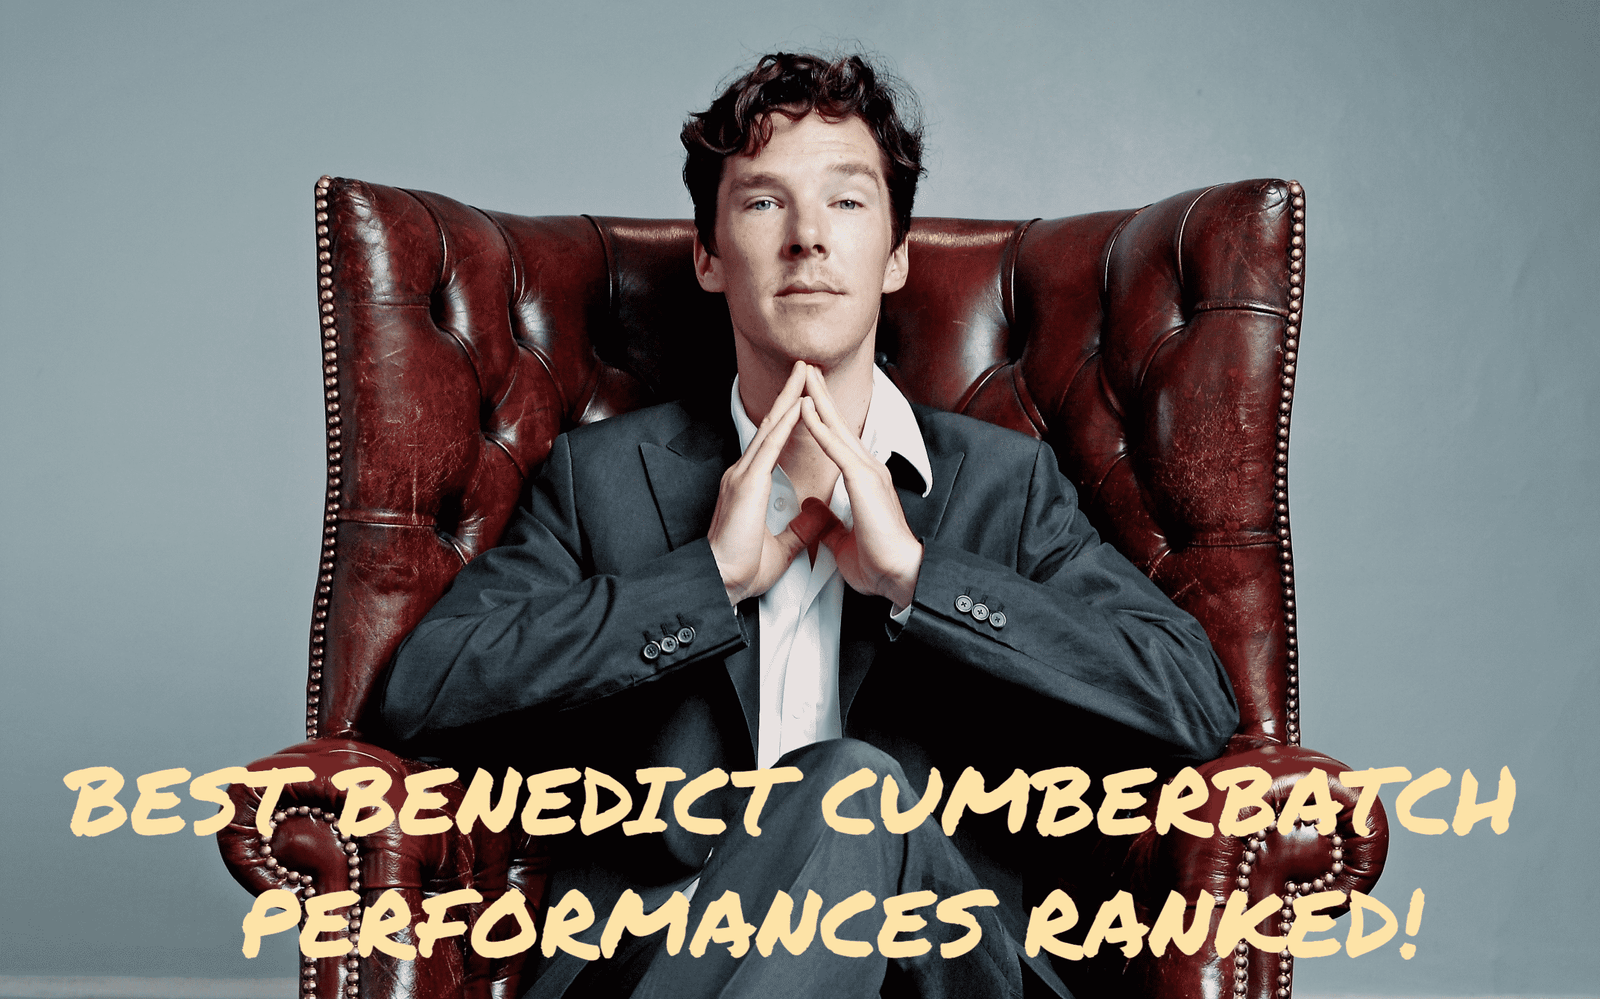 Best Benedict Cumberbatch Performances Ranked! – Dr. Strange Movies